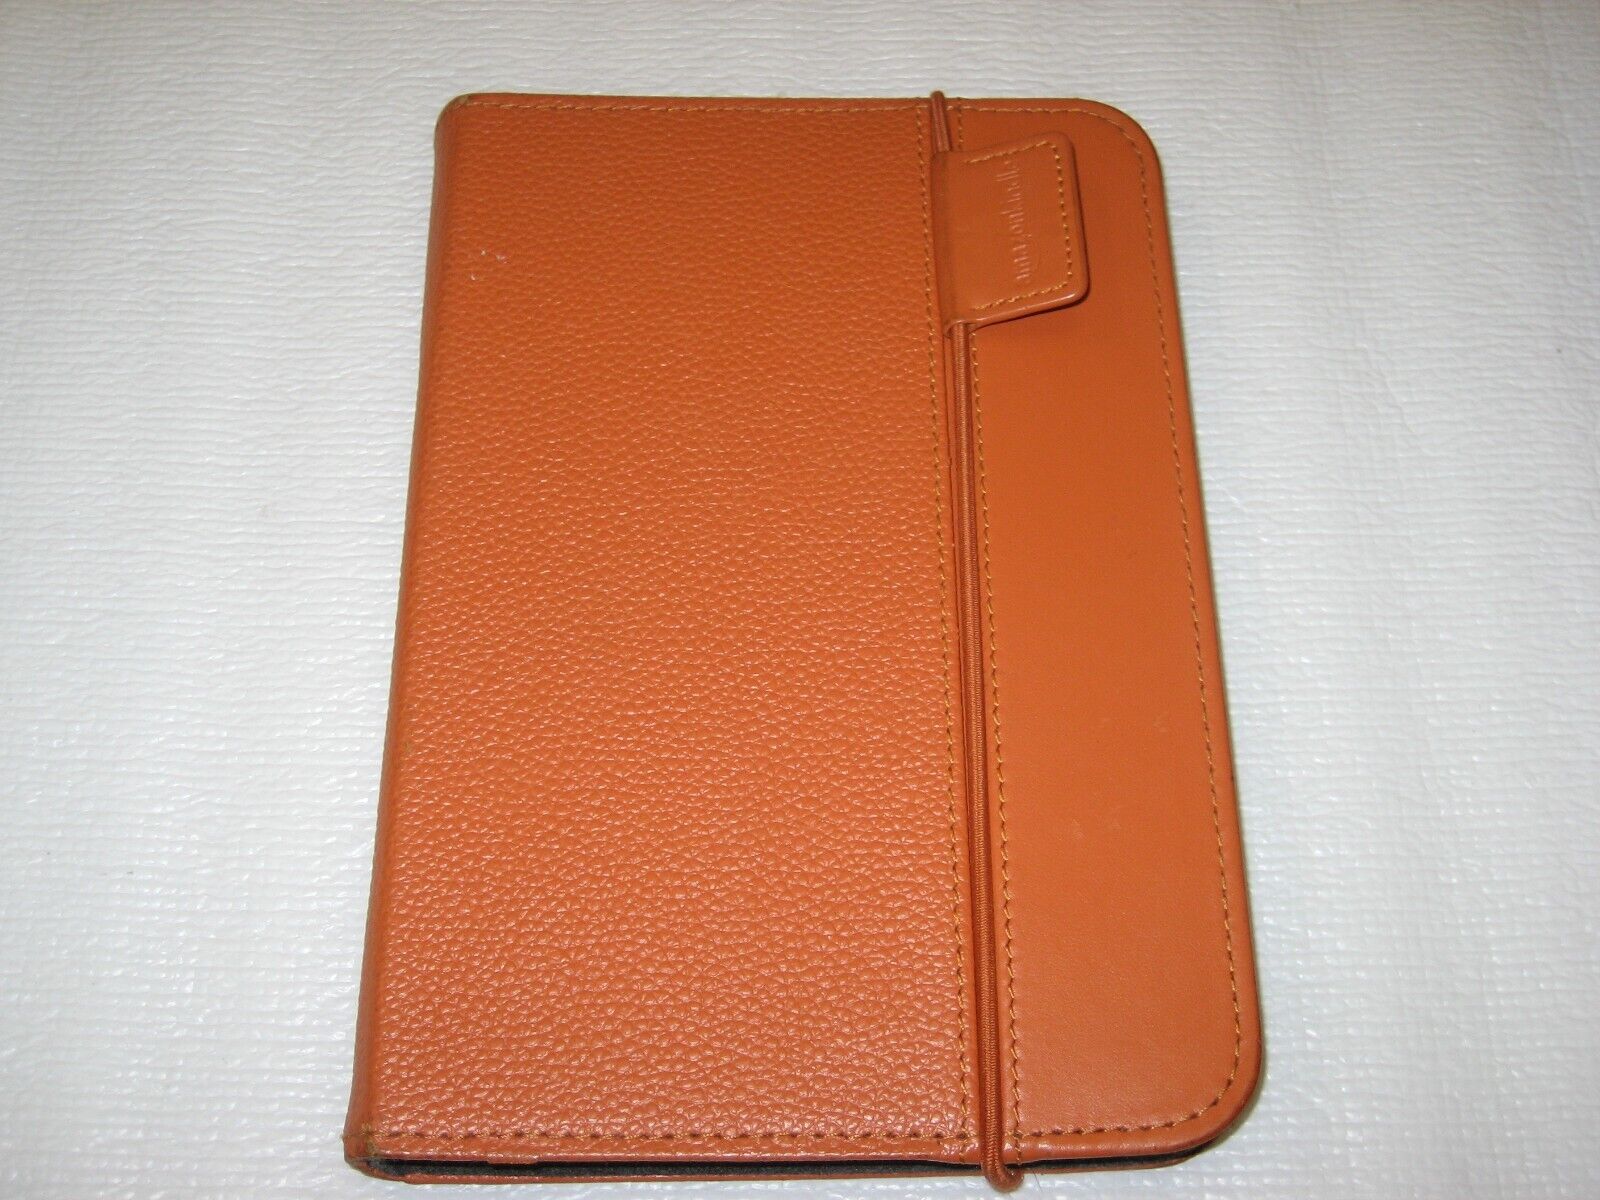 Original Amazon Leather Cover Case w/ Light for Kindle Keyboard 3 3rd Gen Orange